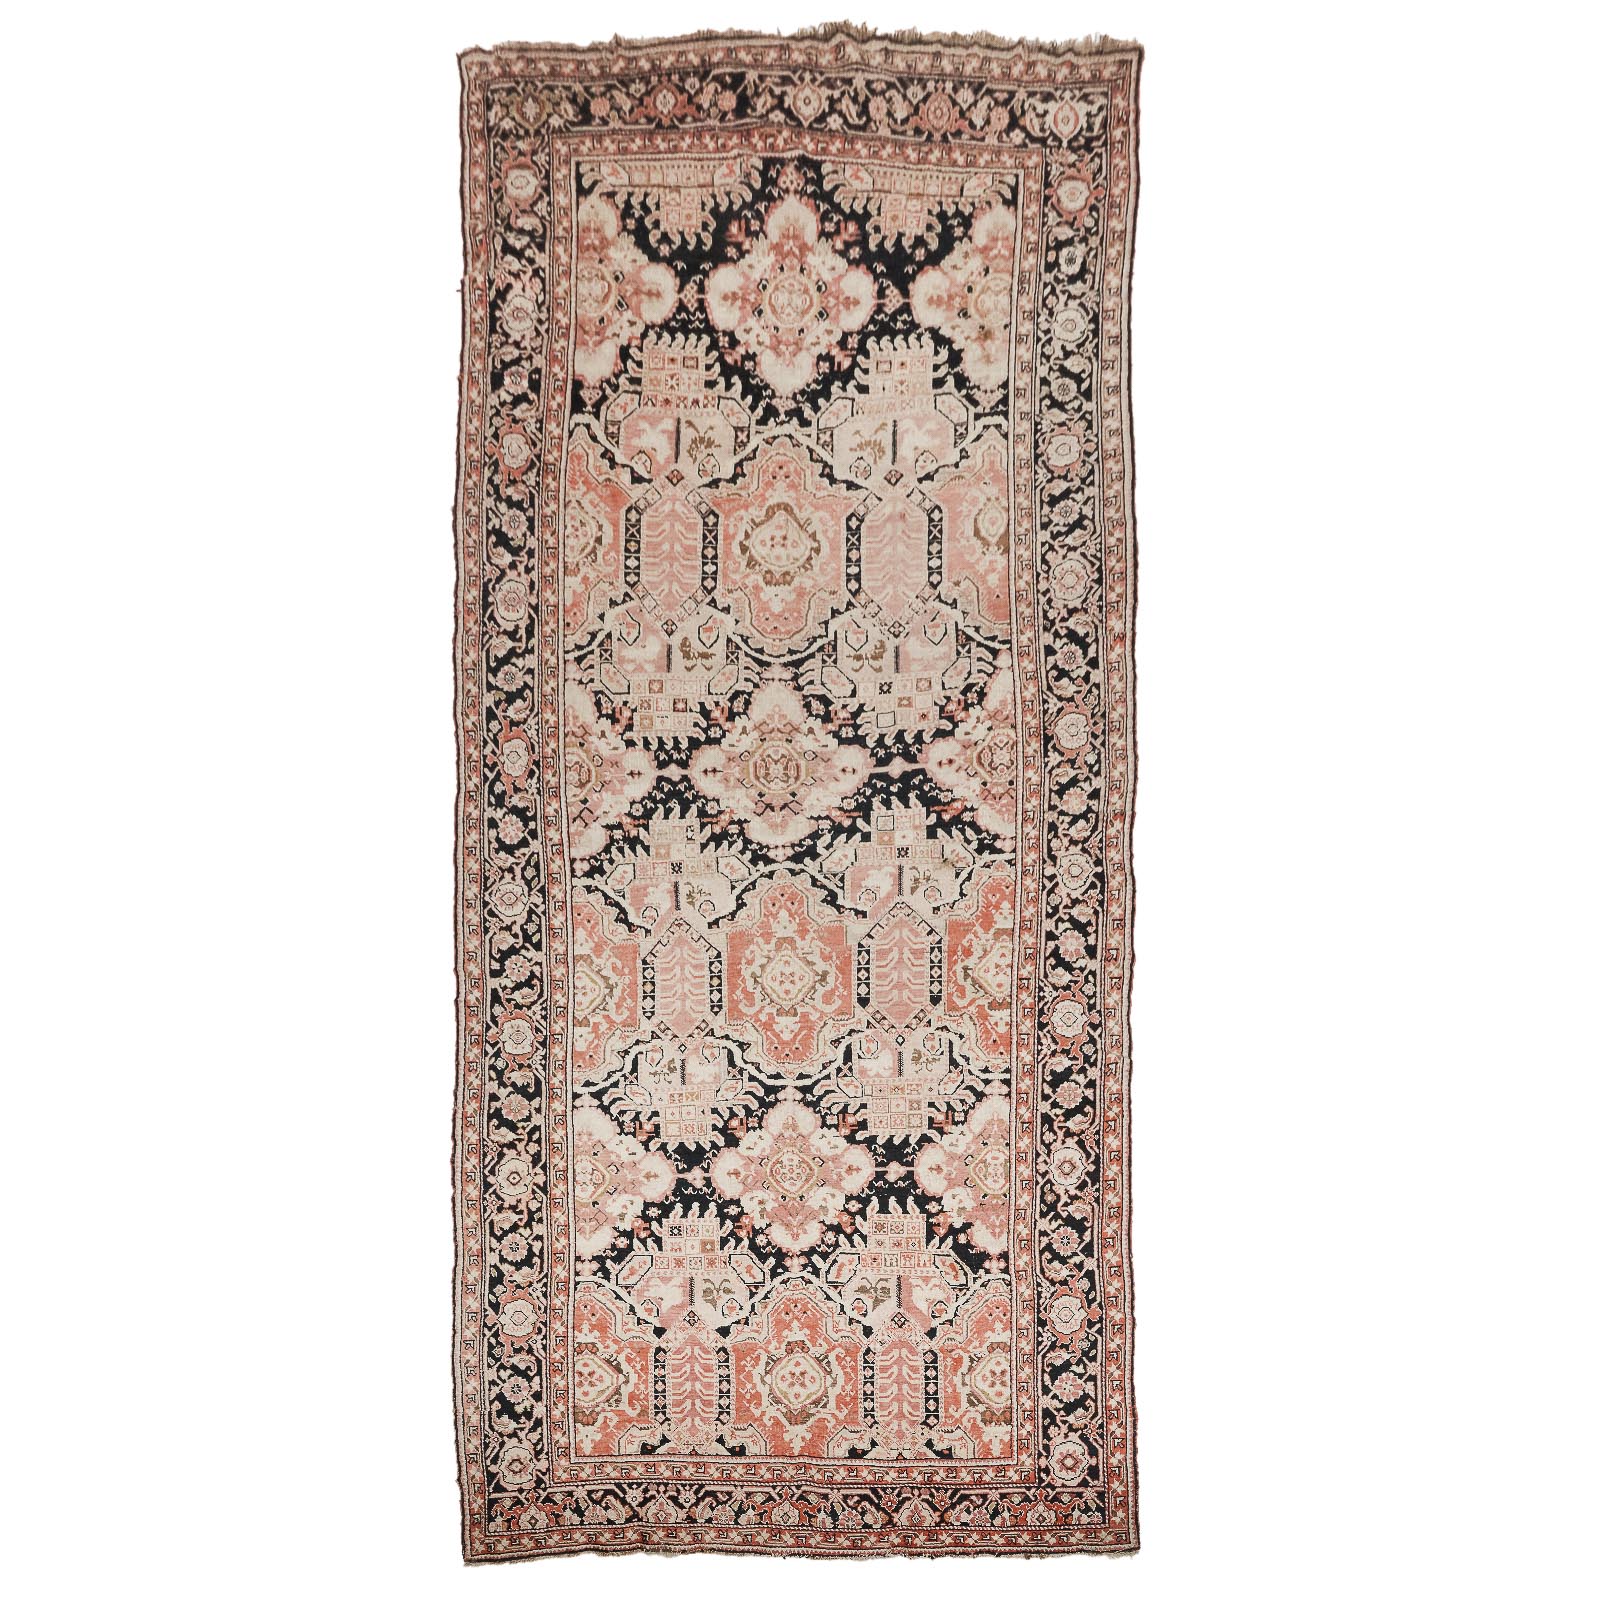 Armenian Karabagh Corridor Carpet, c.1910/20